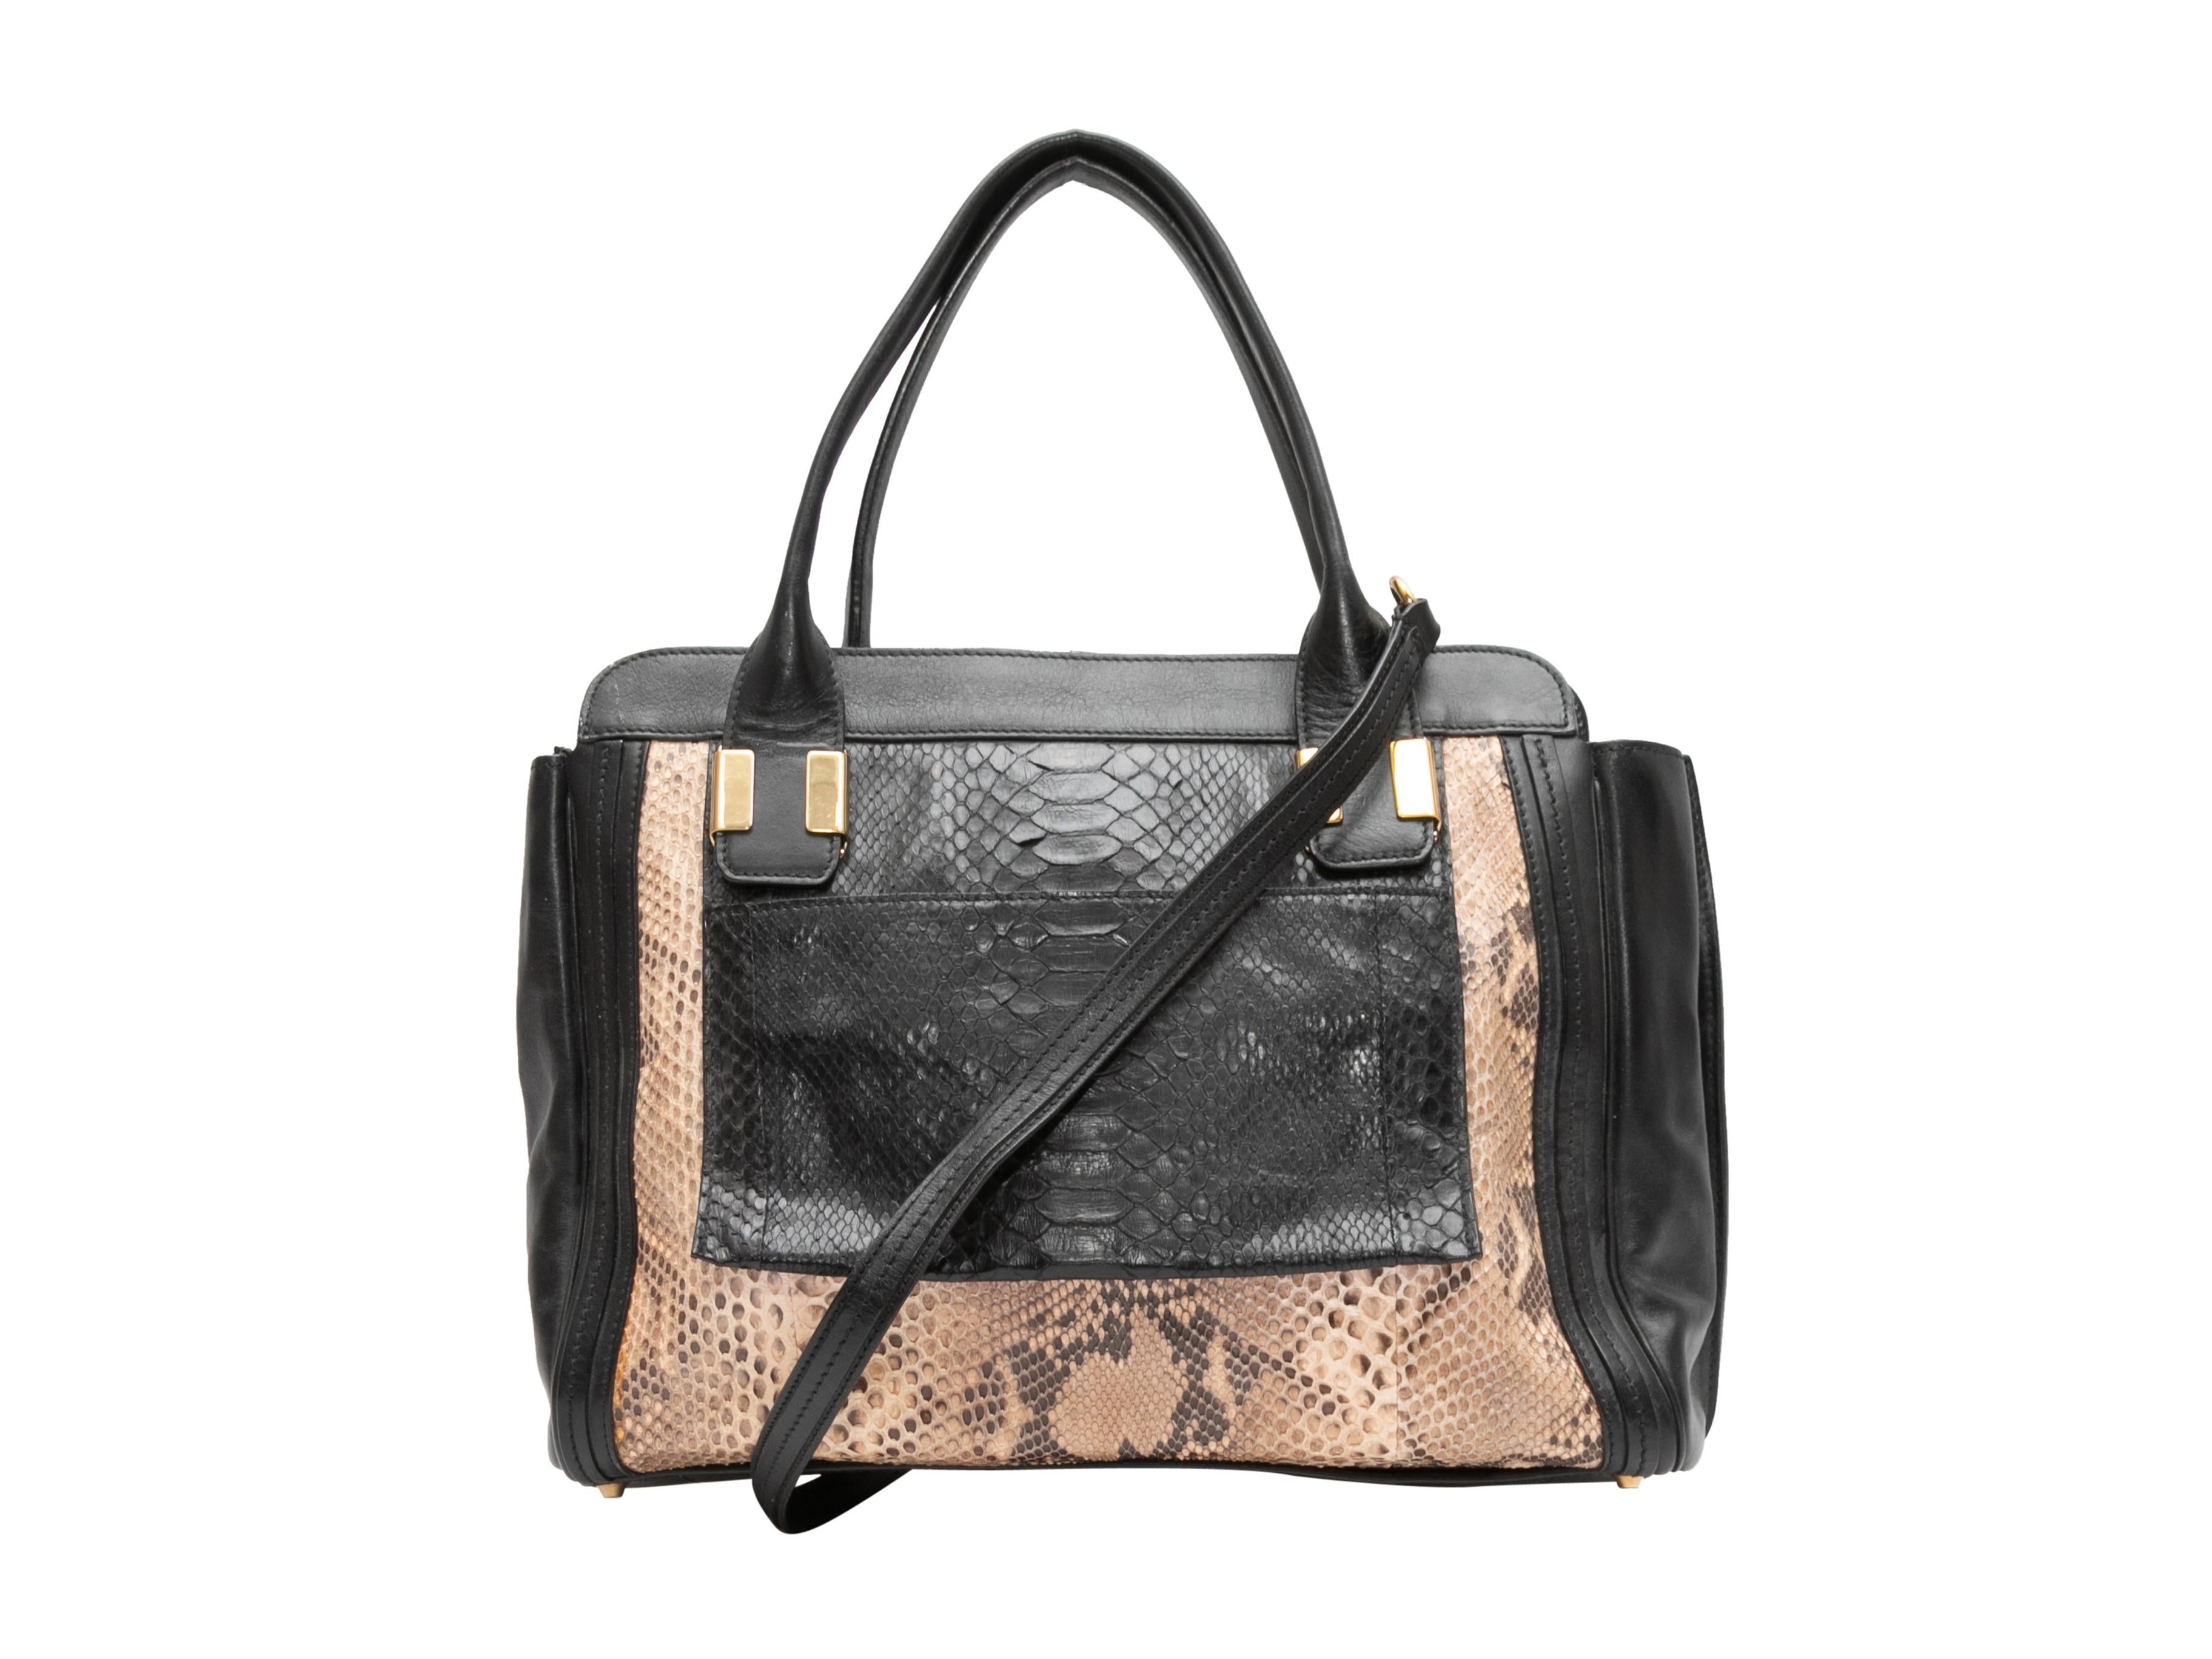 Black & Beige Chloe Leather & Python Tote Bag For Sale 1